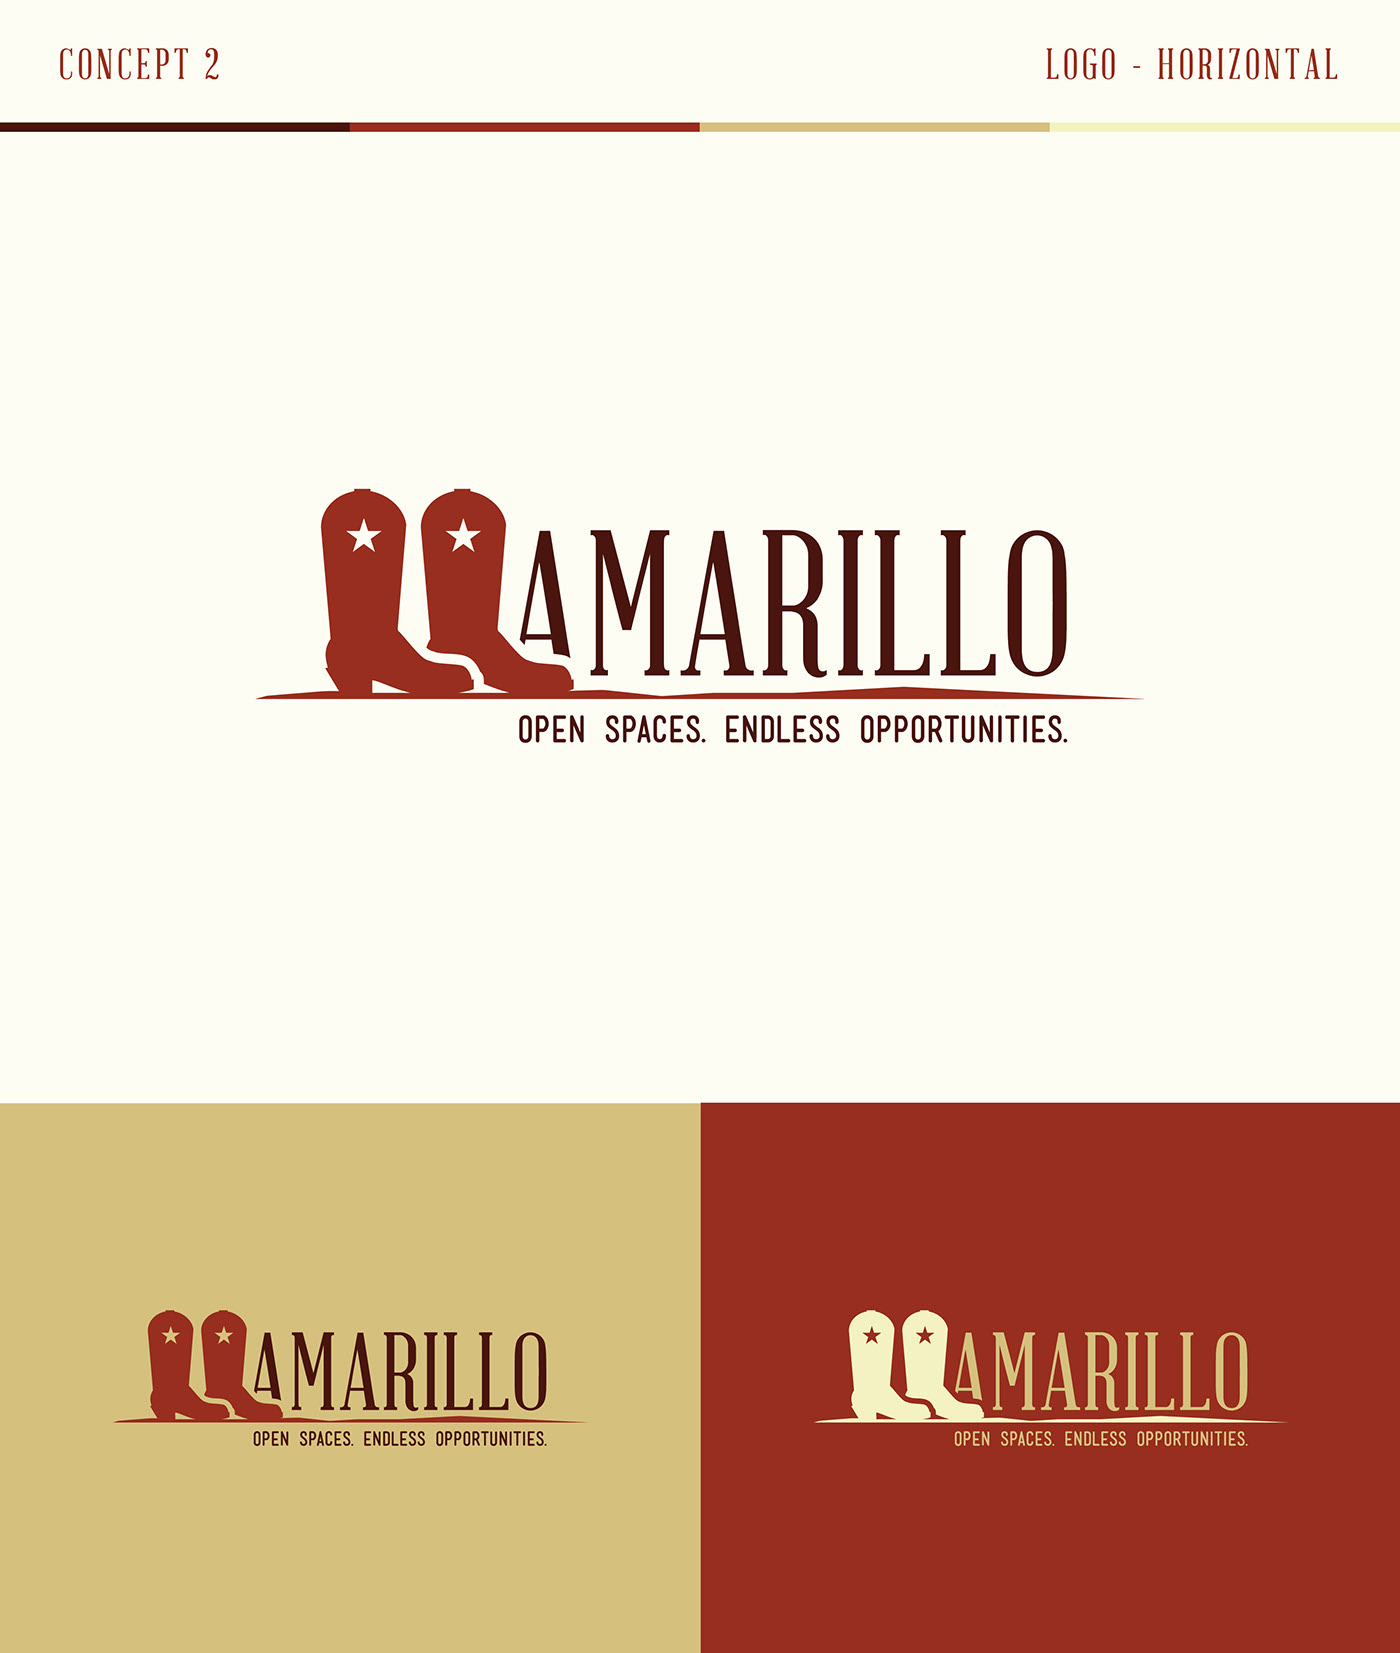 Amarillo Logo Concepts on Behance